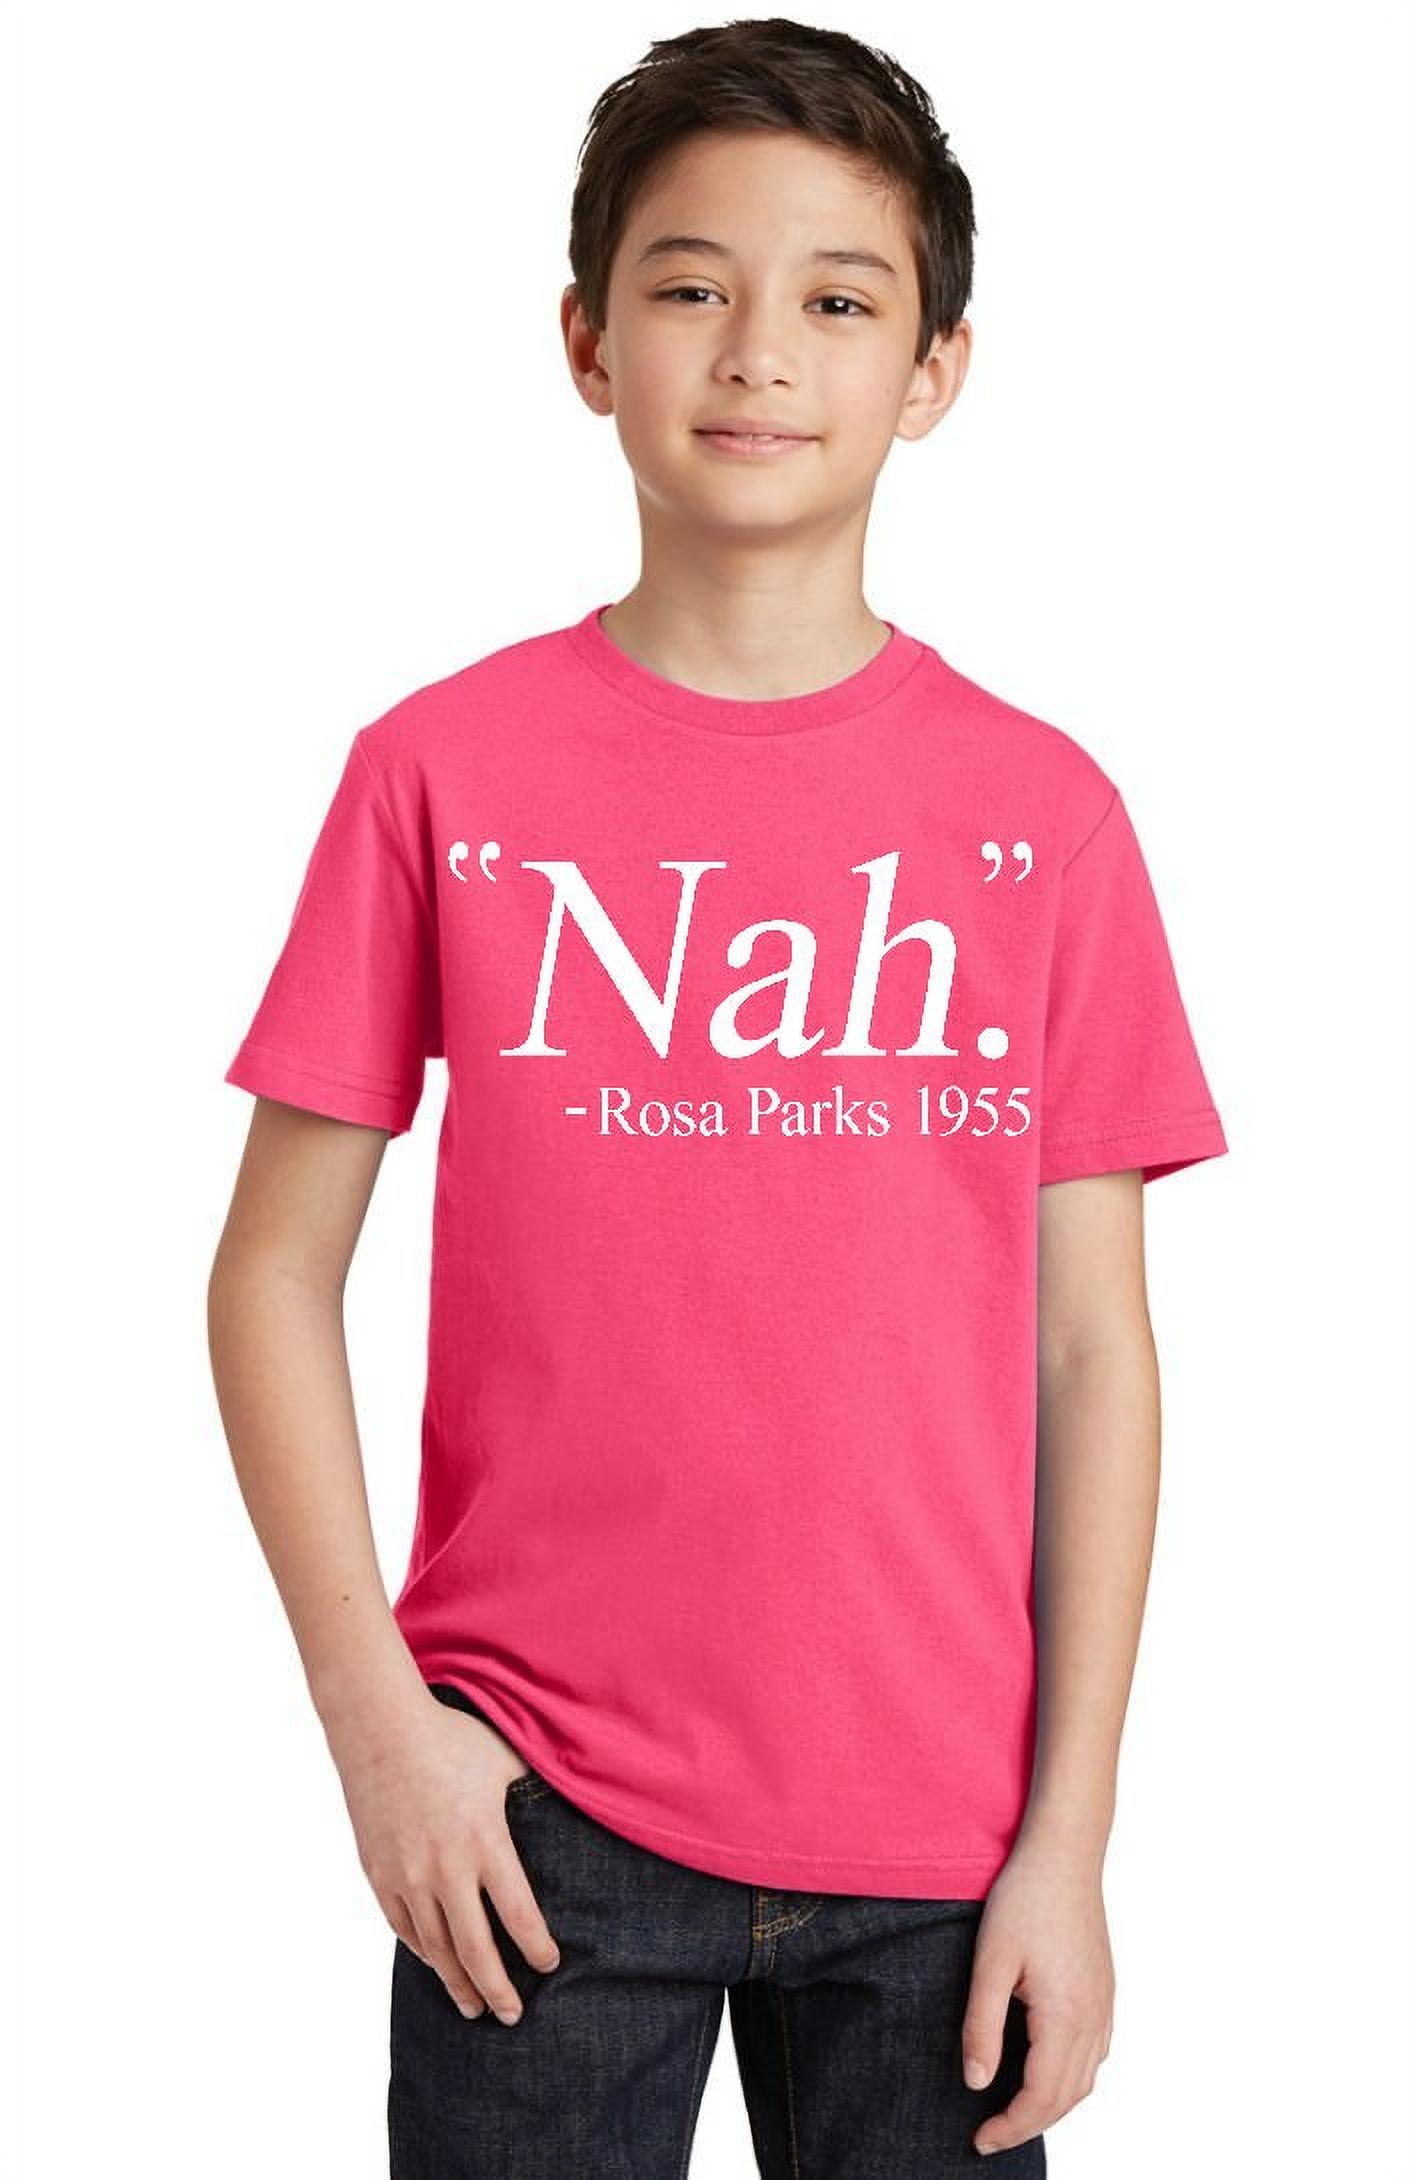 M, Rights Civil Nah. Parks Quote Rosa Youth 1955 T-shirt, Youth Royal